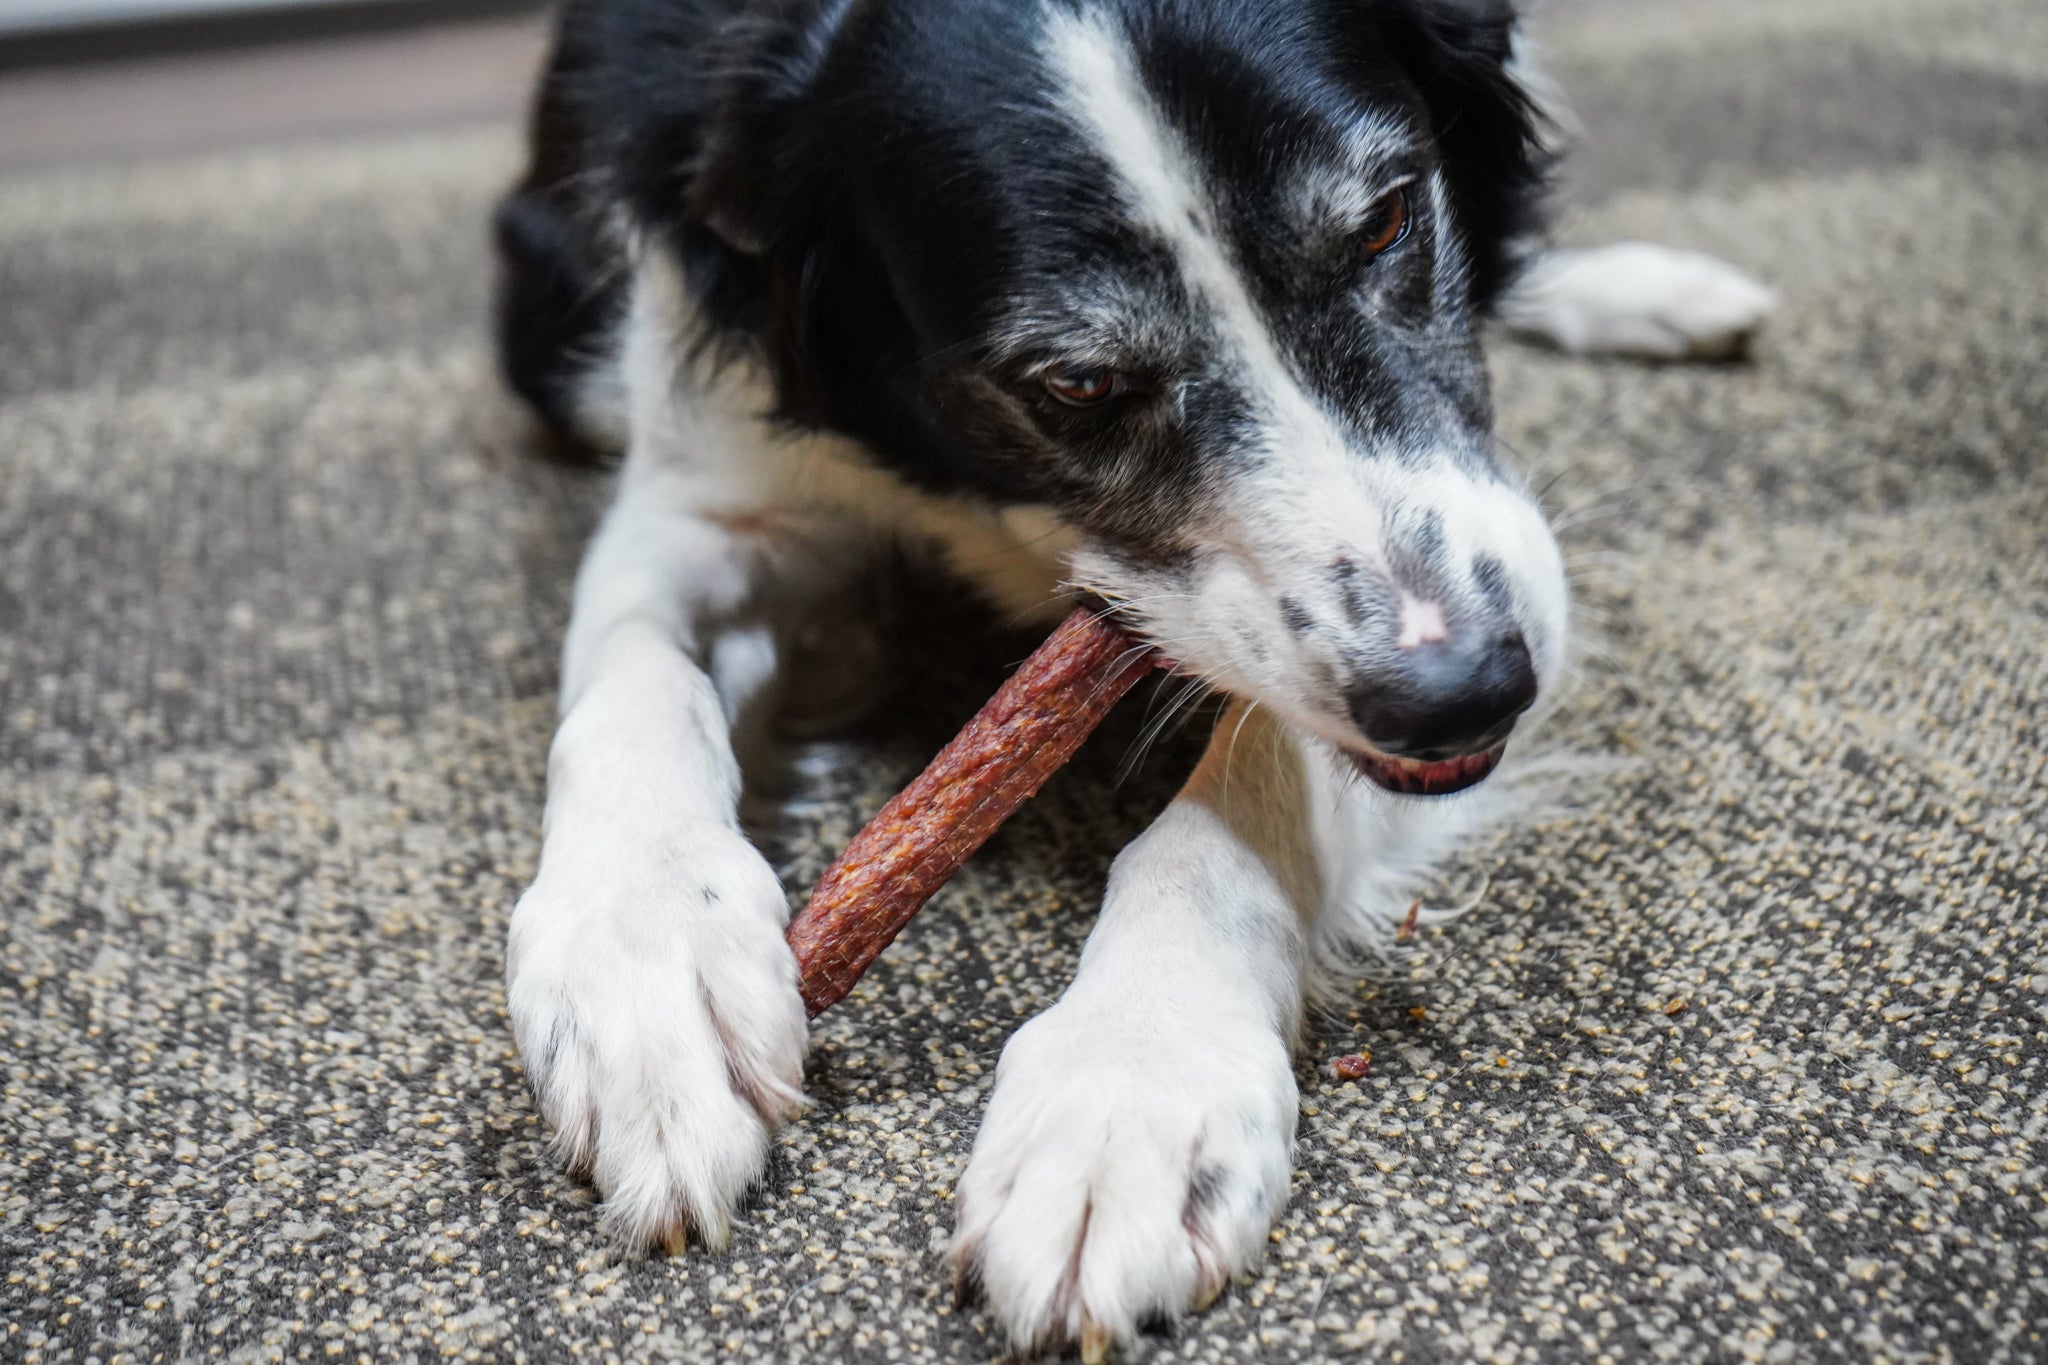 Dog eating a bone at home